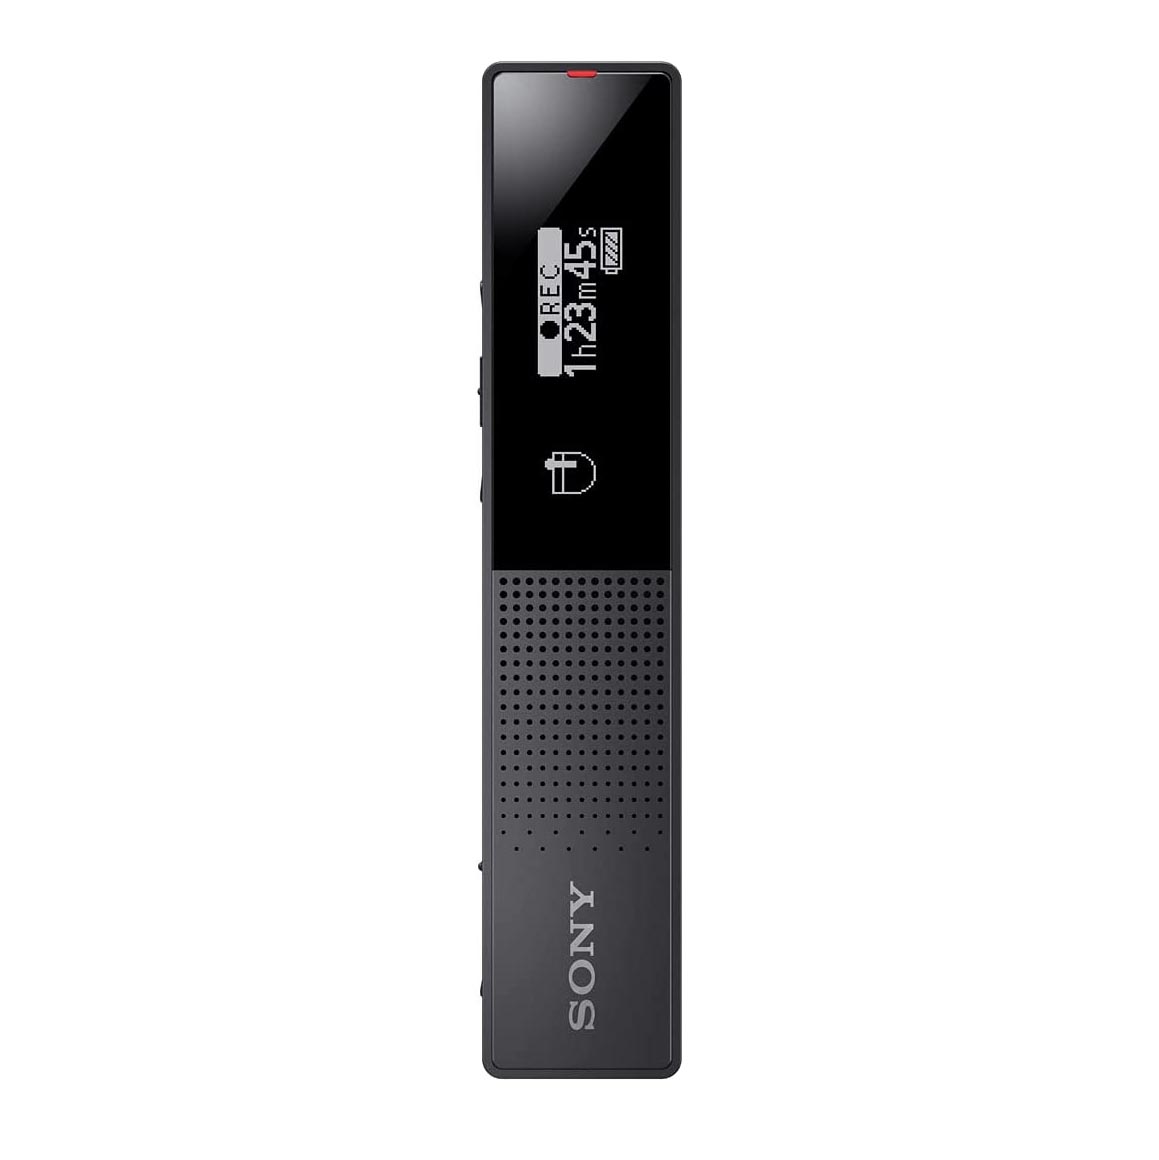 Диктофон Sony ICD-TX660, черный